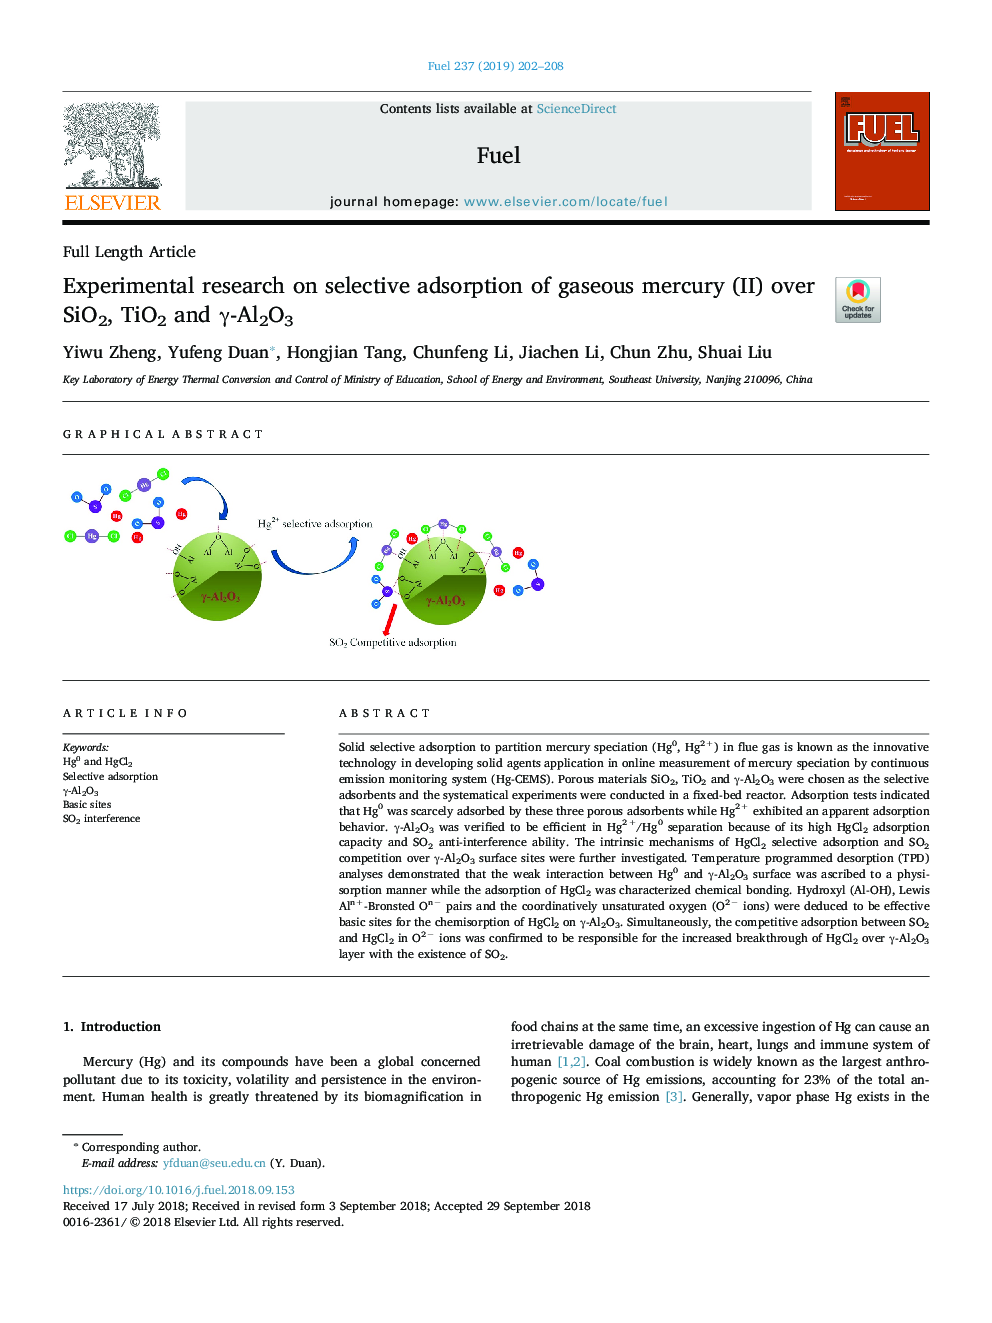 Experimental research on selective adsorption of gaseous mercury (II) over SiO2, TiO2 and Î³-Al2O3